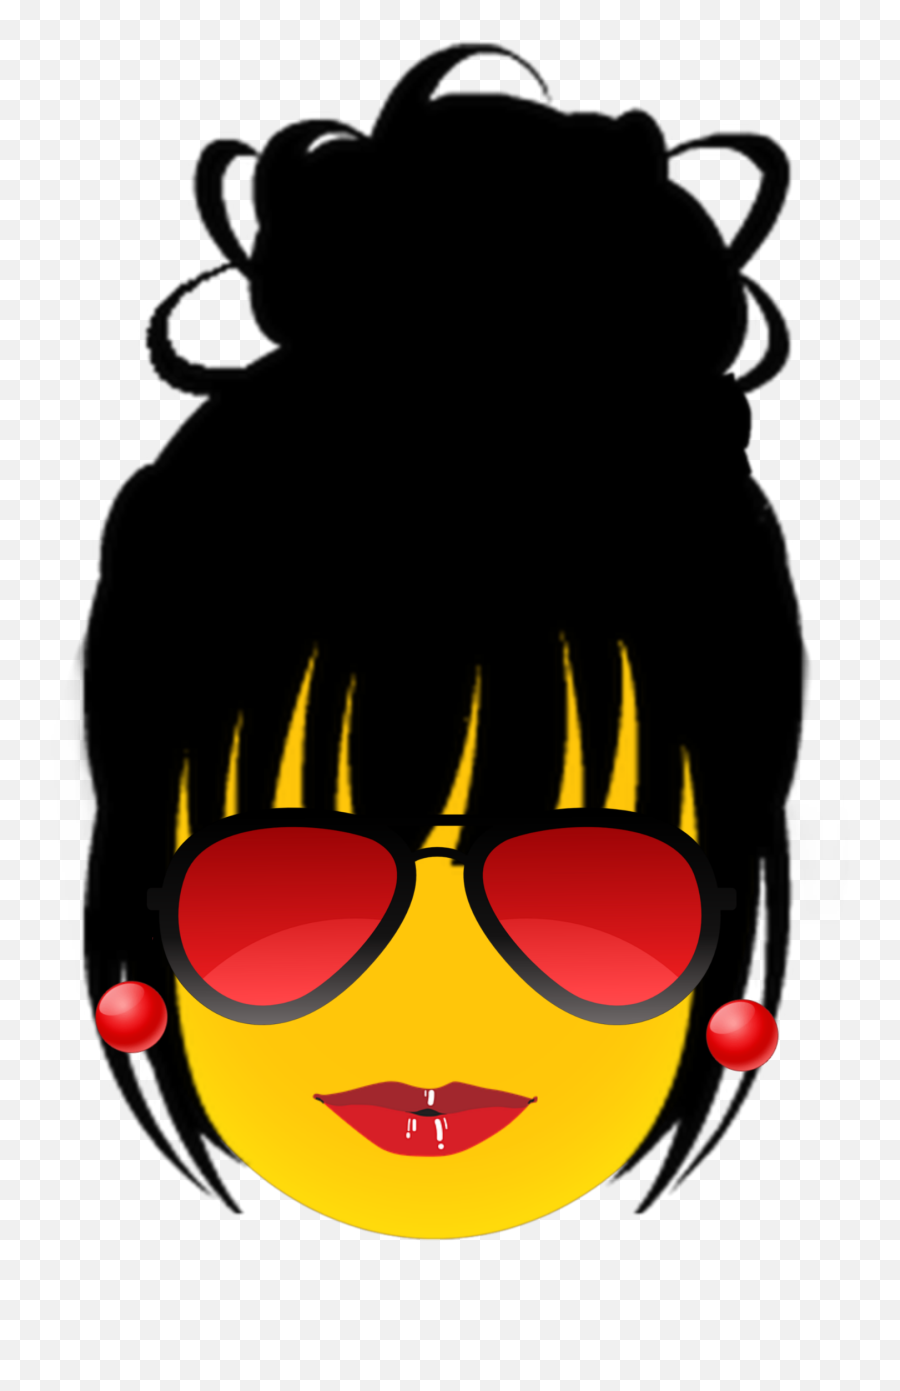 Emojigirl Sticker By Dubrootsgirl - Hair Design Emoji,Female Emoji Faces With Hair In A Bun